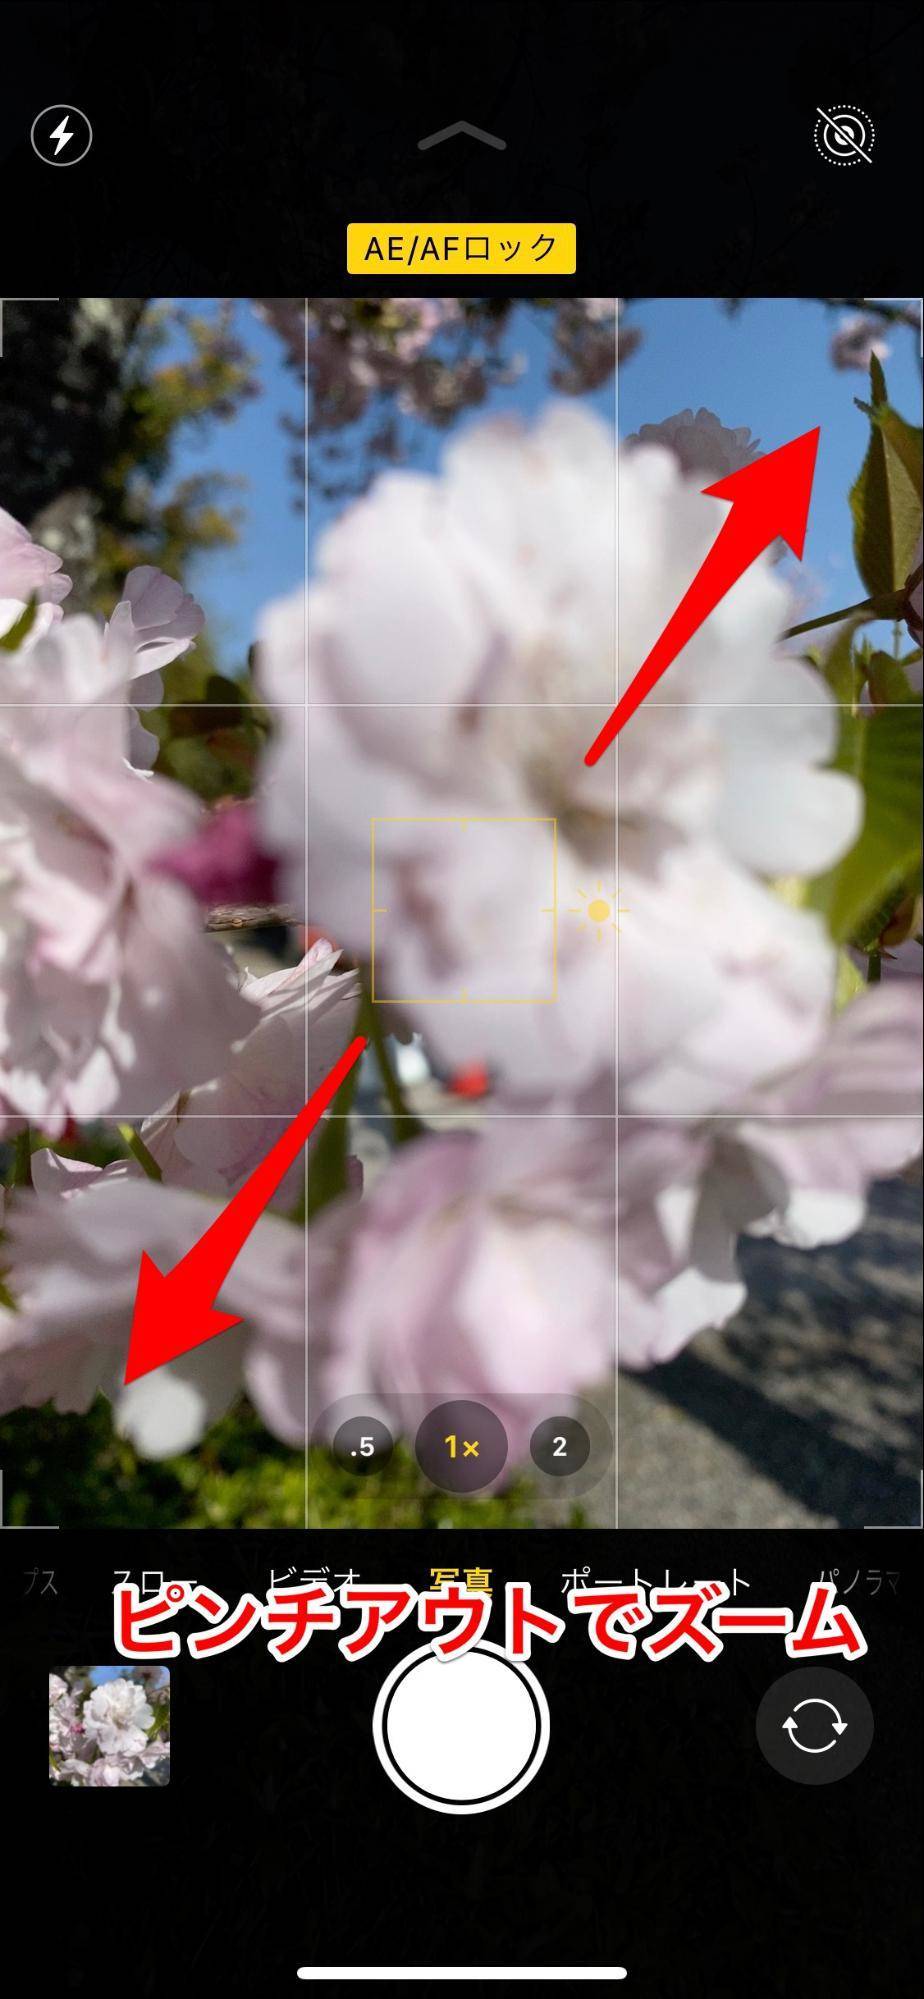 Iphoneカメラの接写 マクロ撮影 方法 綺麗な撮り方 設定を徹底解説 Appliv